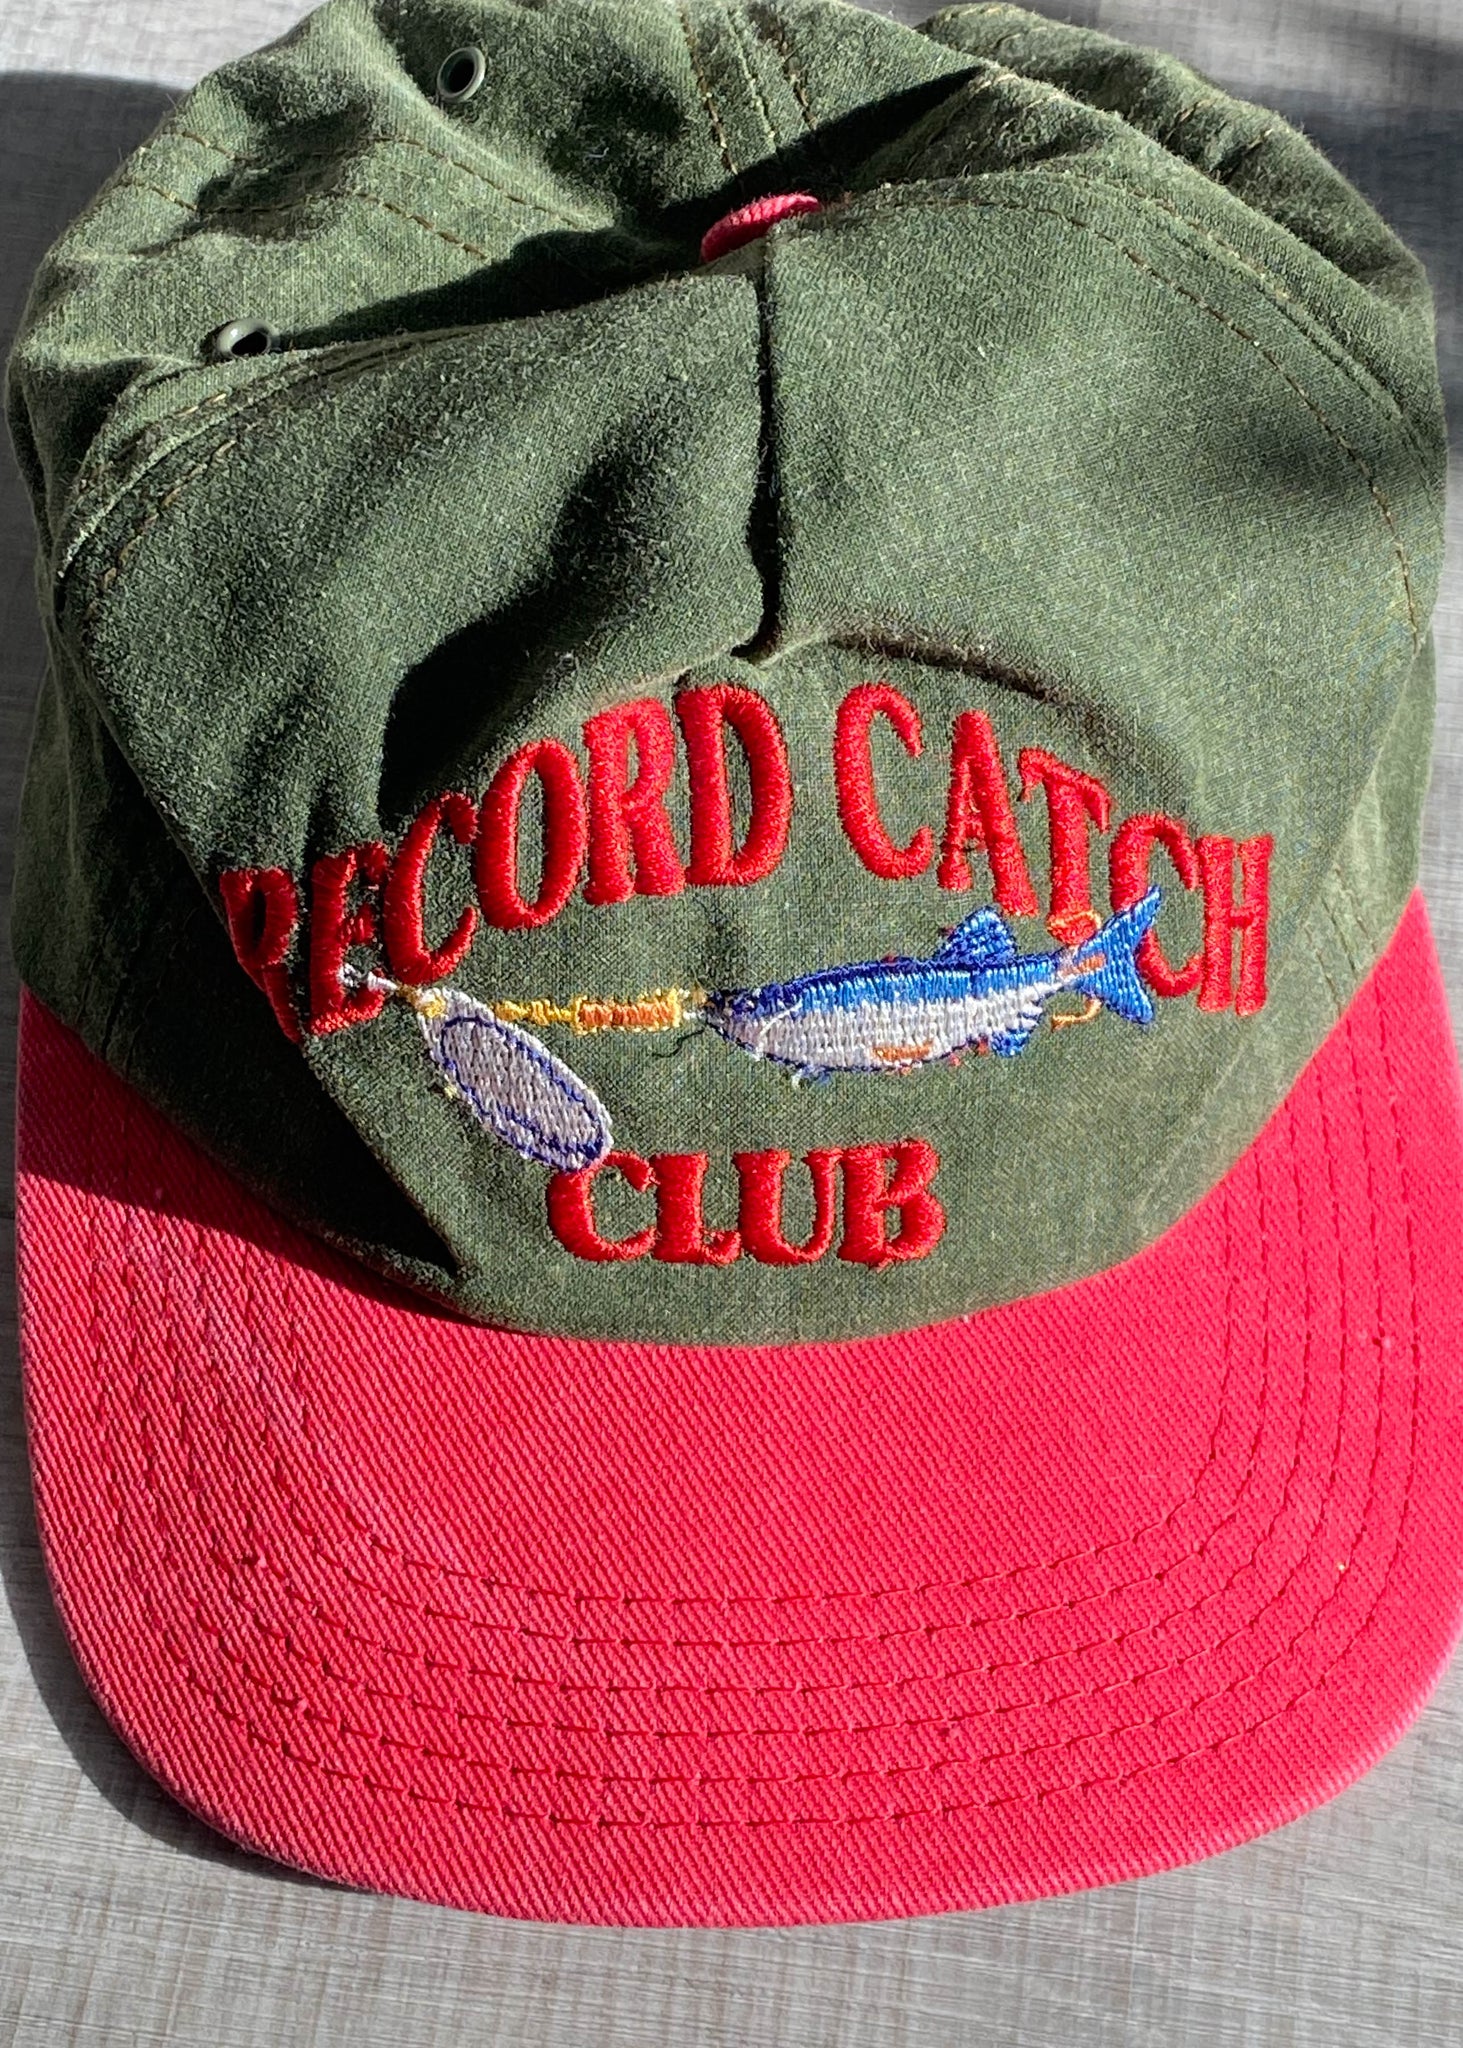 90's Record Catch Club